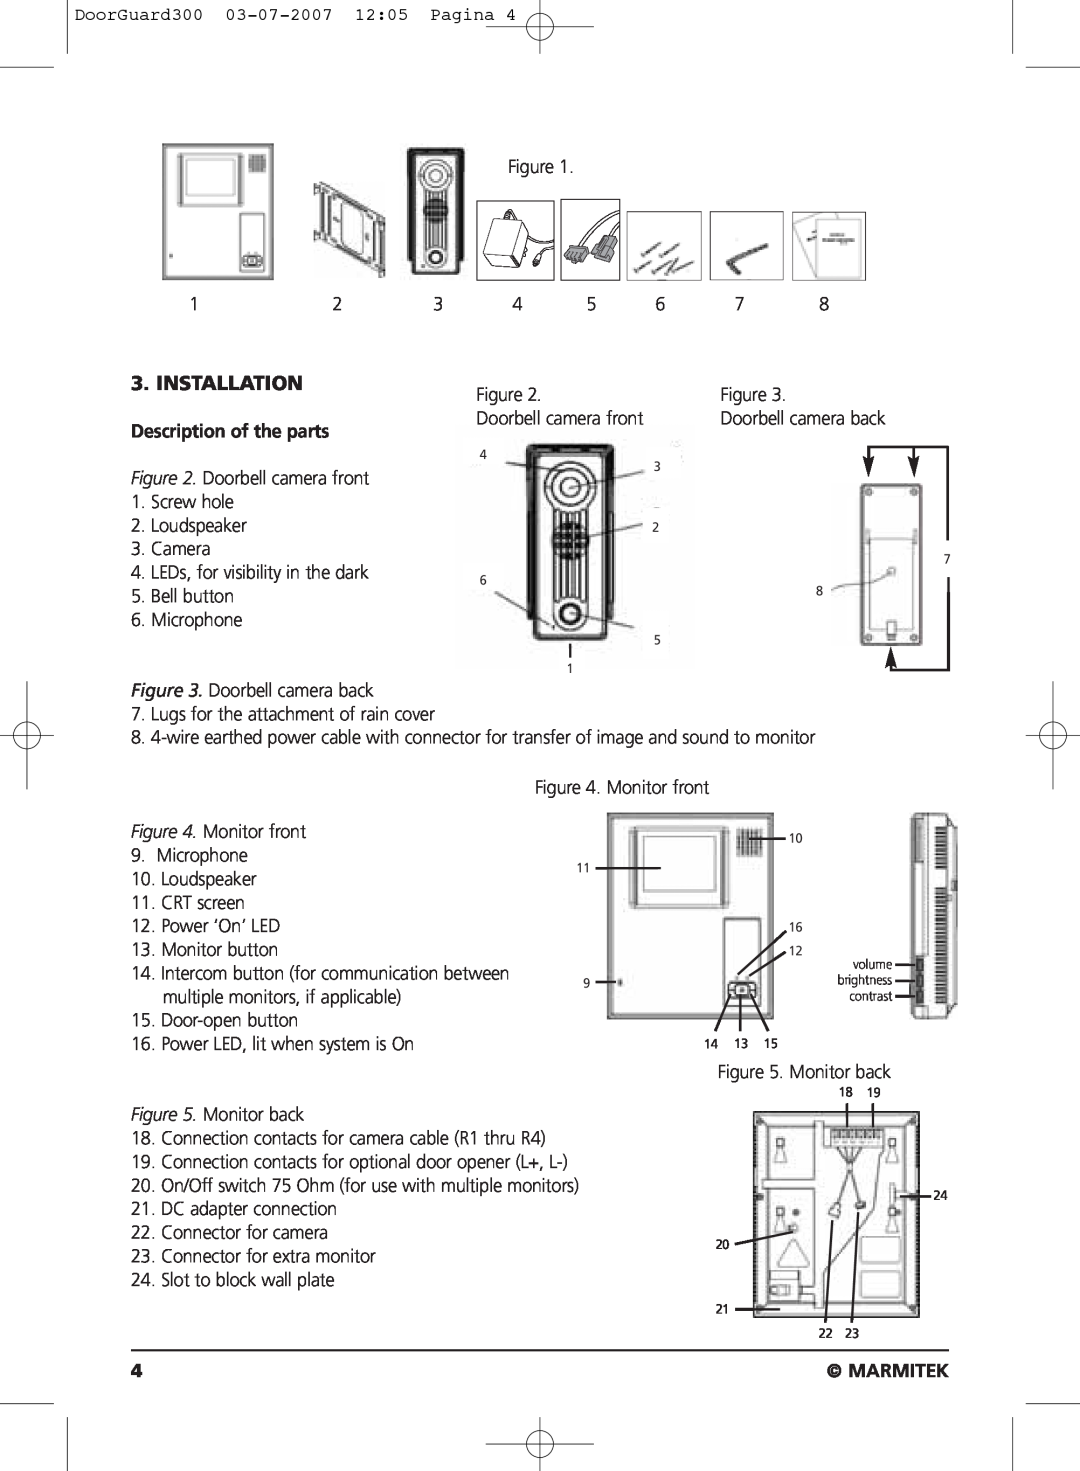 Marmitek DOORGUARD300TM user manual Installation, Description of the parts, Monitor front 9. Microphone, Marmitek 